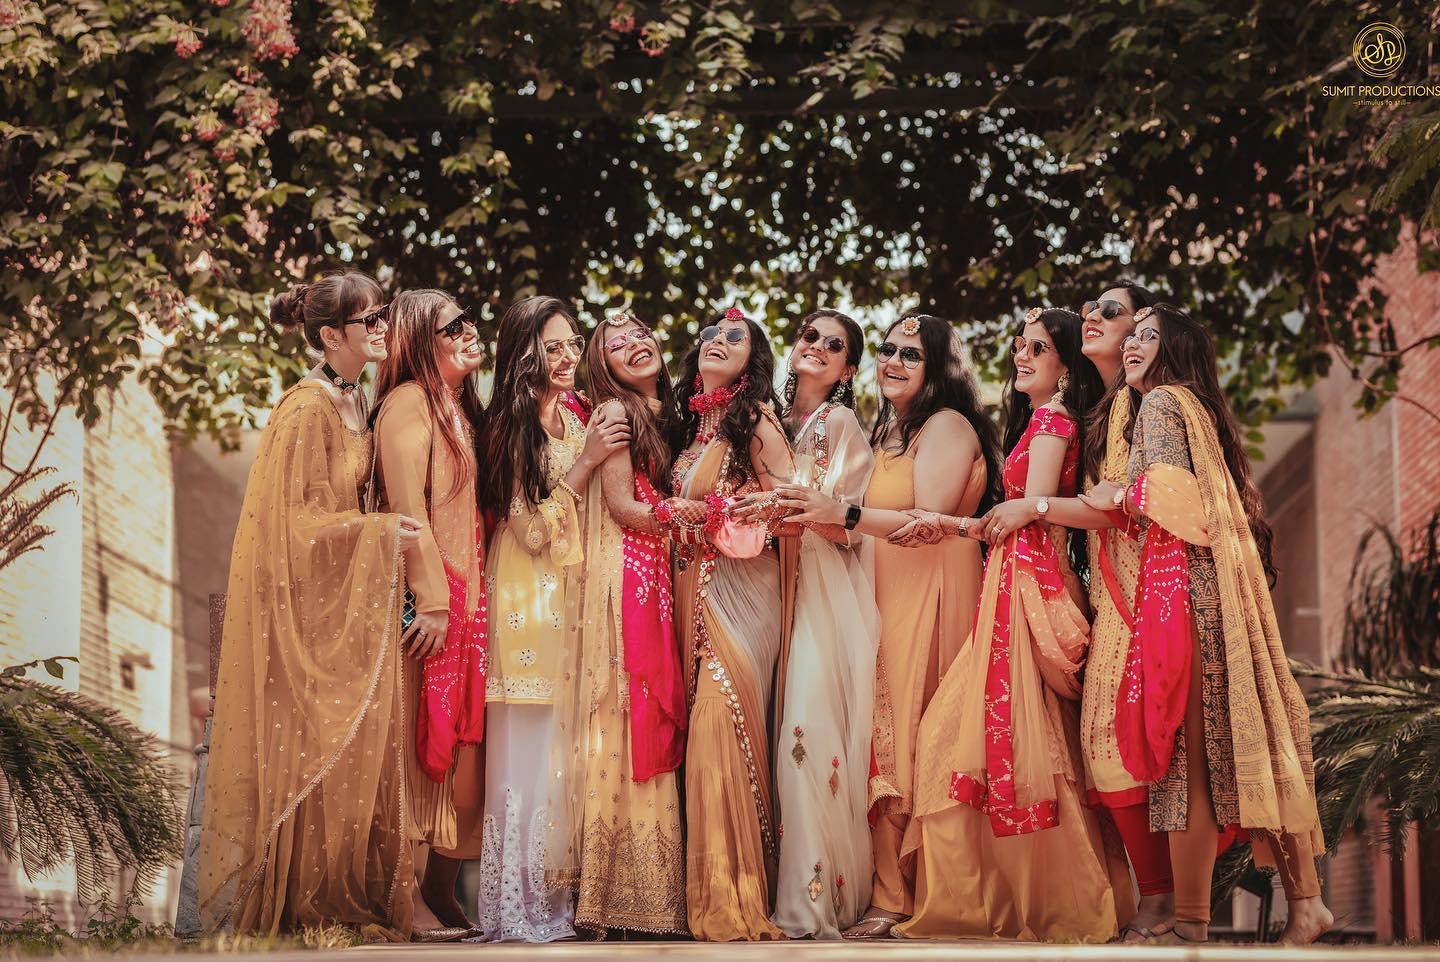 Haldi photoshoot poses with sister - haldi photoshoot ideas with sisters & bridemaids